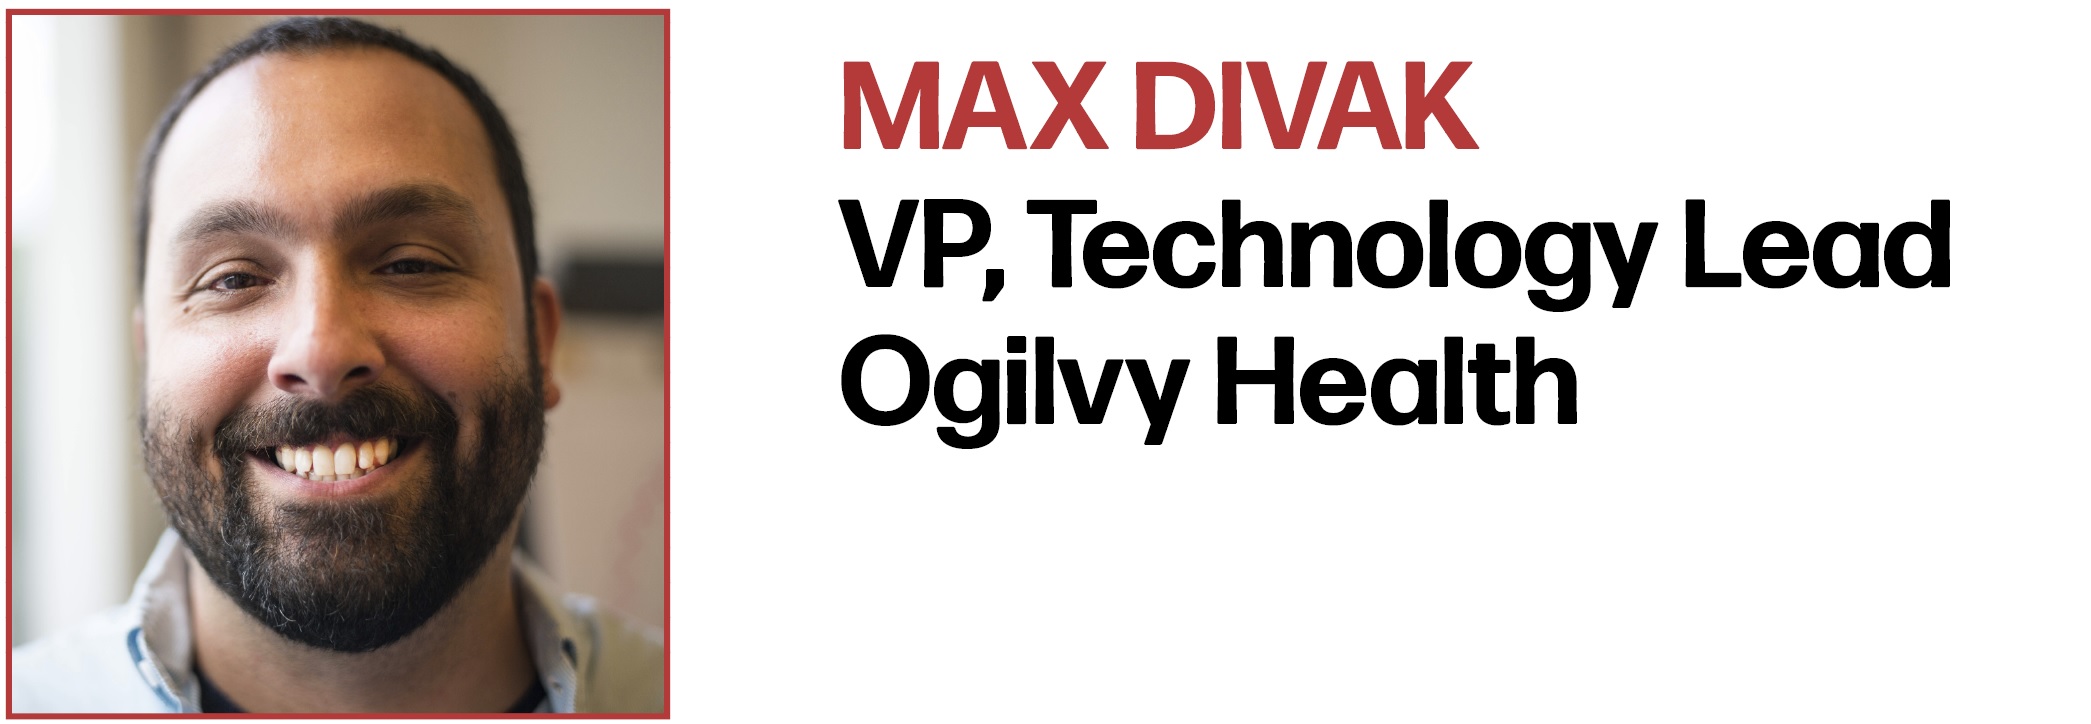 Max Divak VP, Technology Lead Ogilvy Health